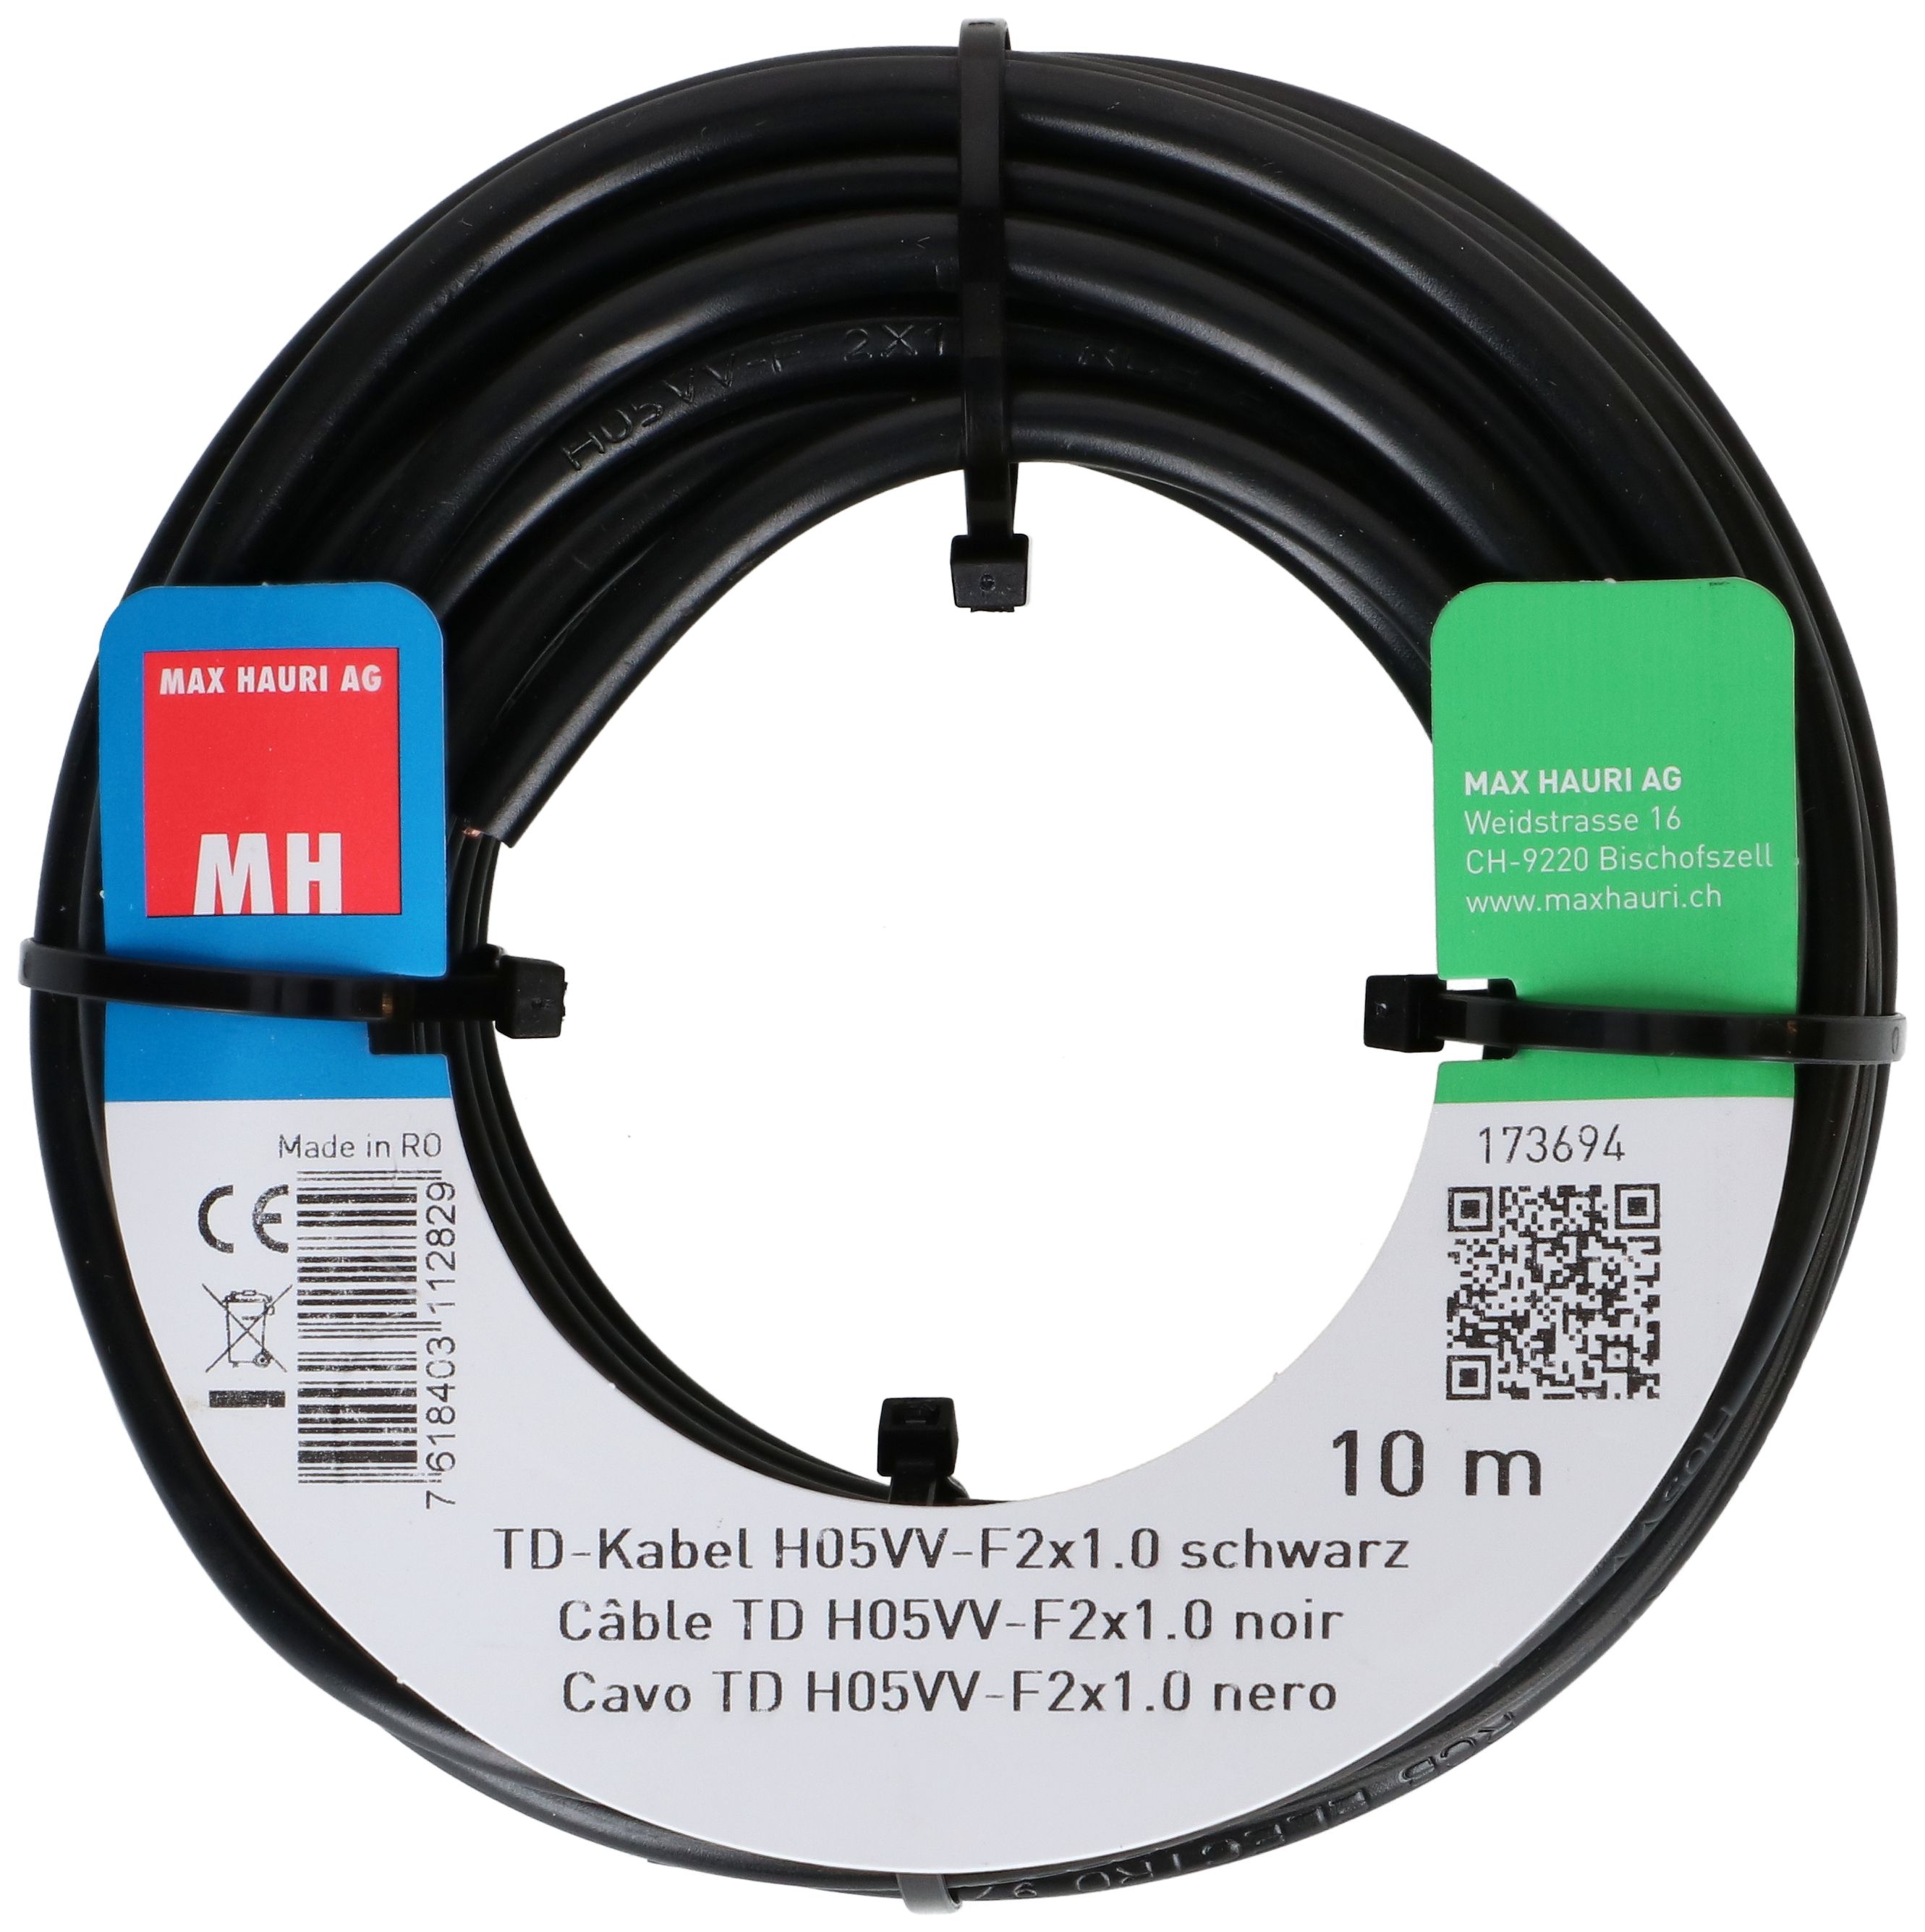 TD-Kabel H05VV-F2X1.0 10m schwarz